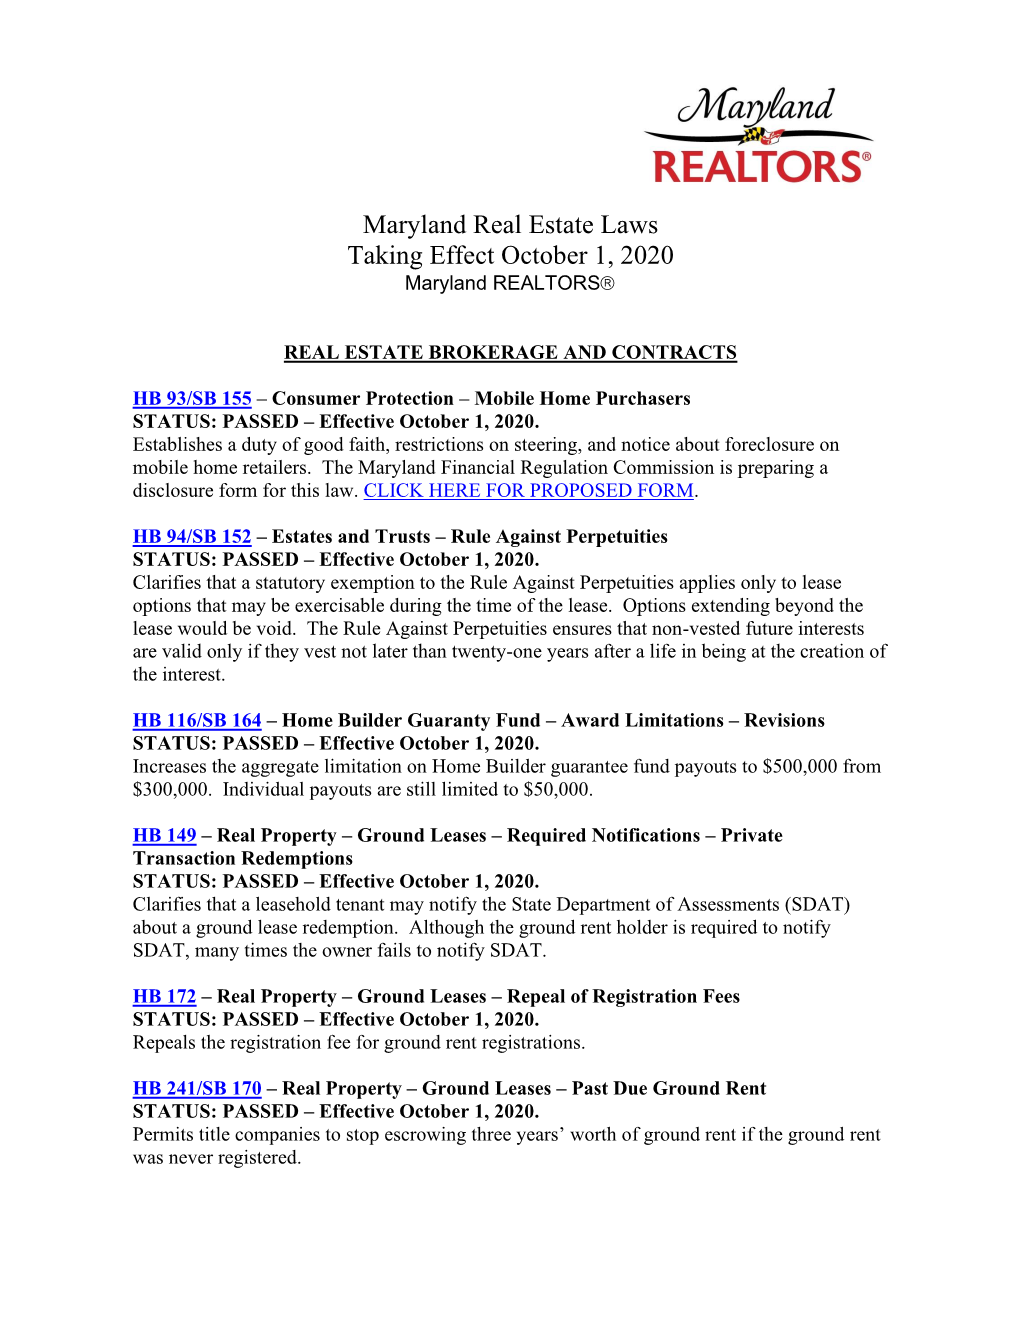 Maryland Real Estate Laws Taking Effect October 1, 2020 Maryland REALTORS